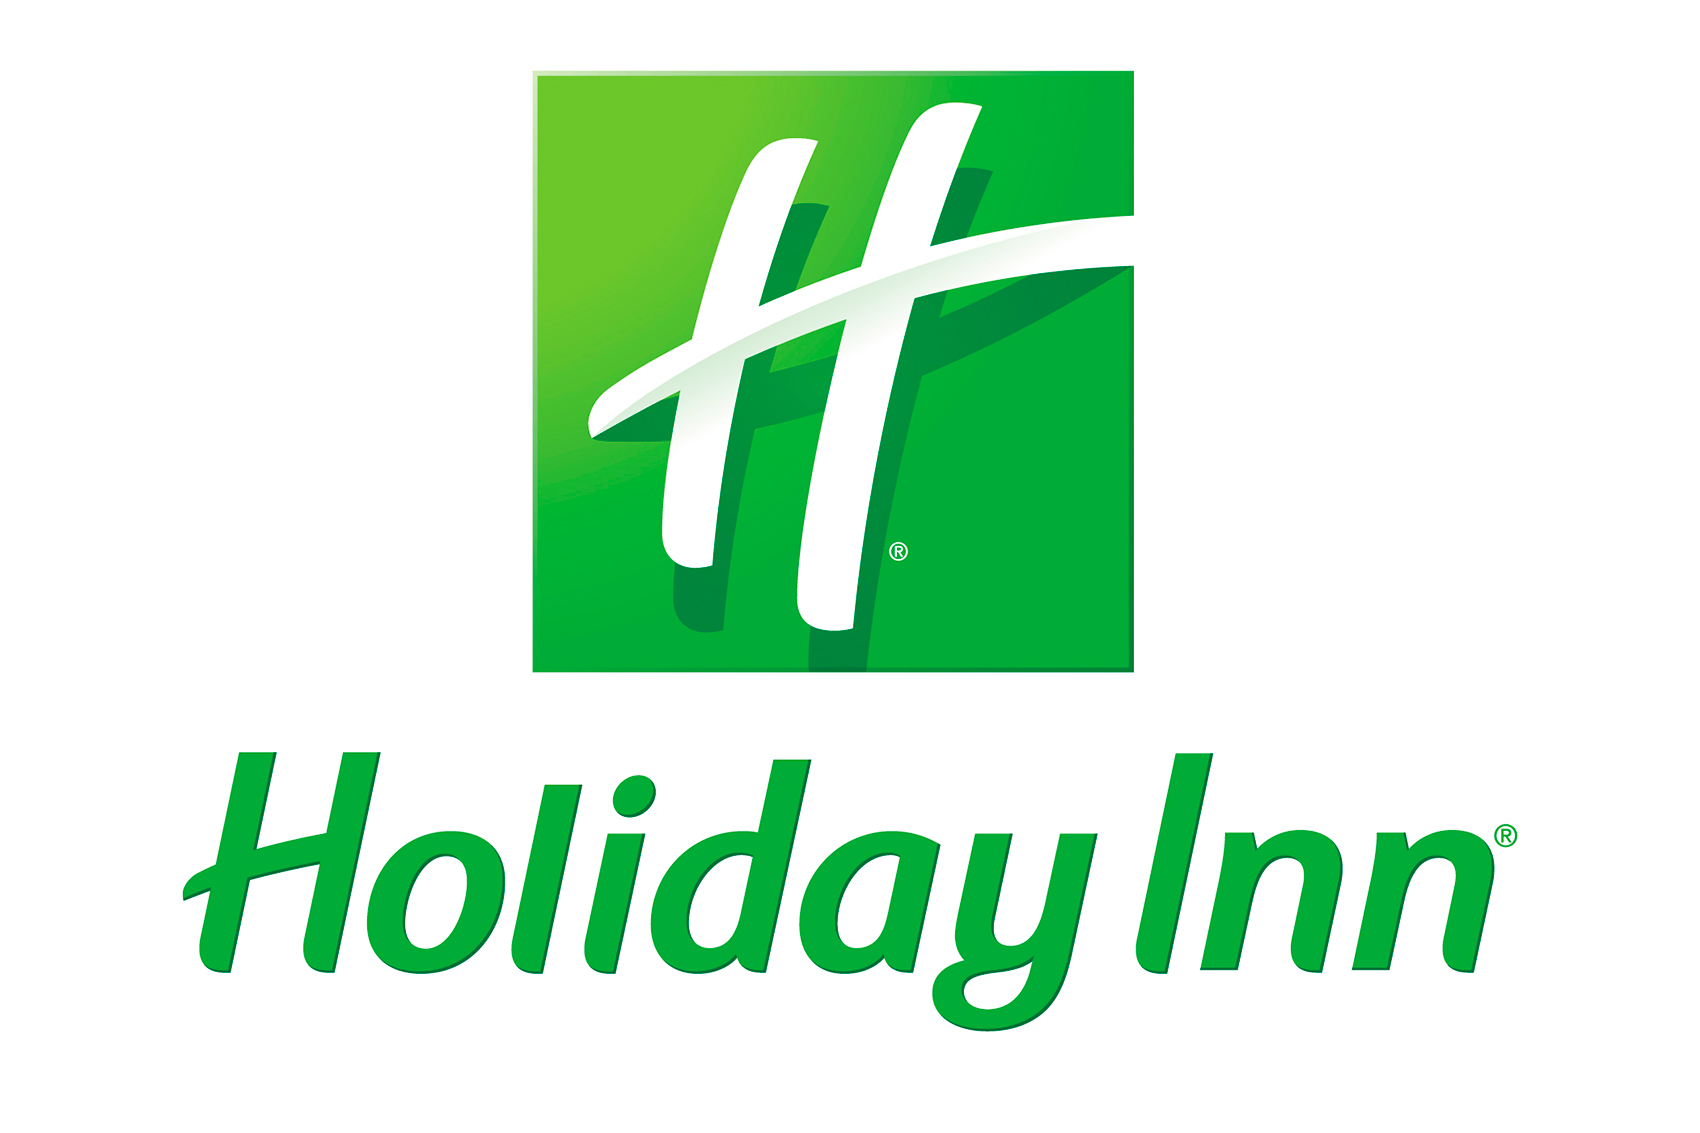 Holiday-Inn-Cumple-Cincuenta-Años